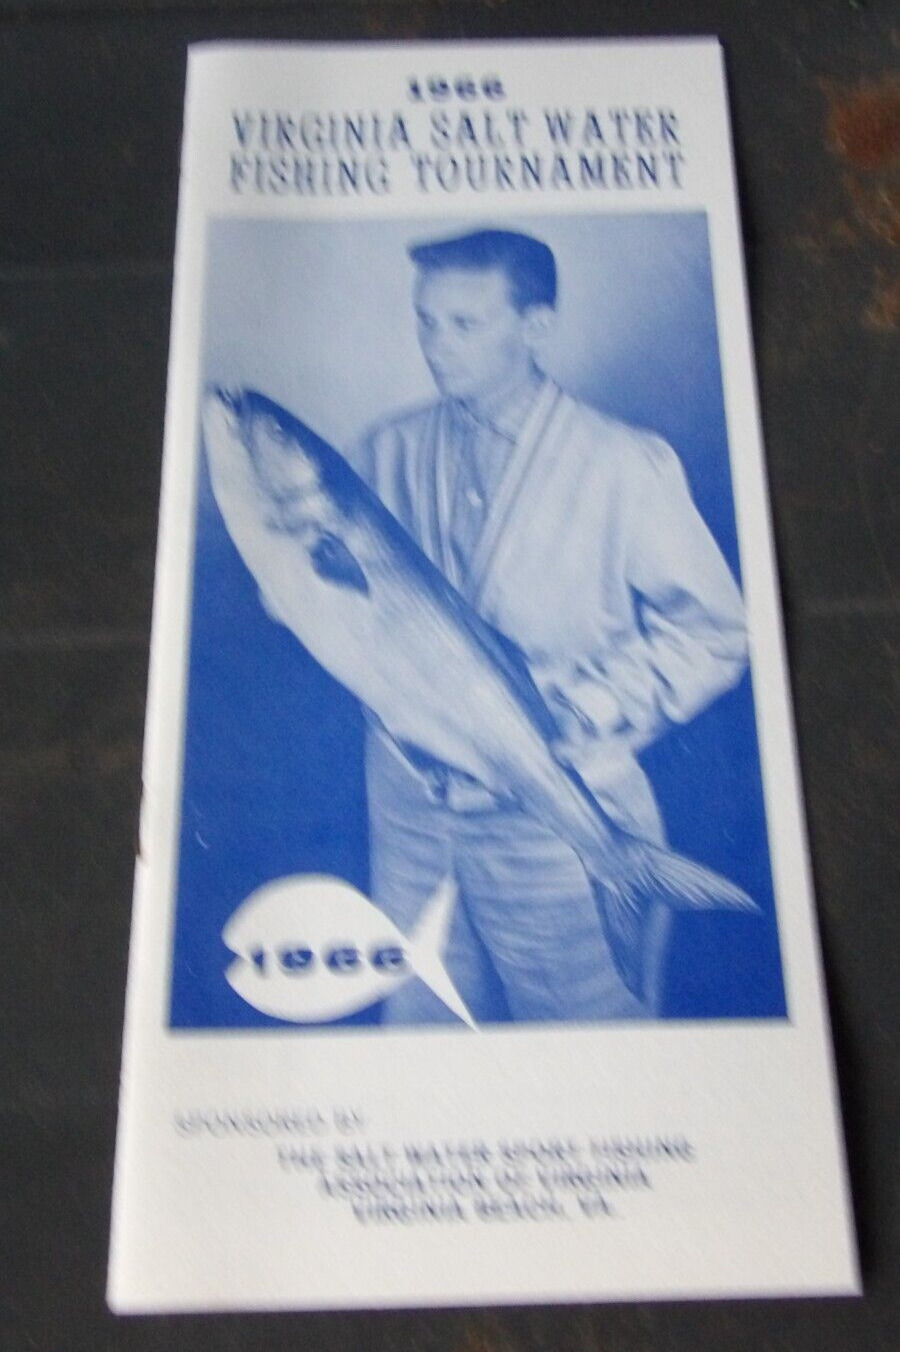 Scarce 1966 Virginia Saltwater Fishing Tournament Brochure